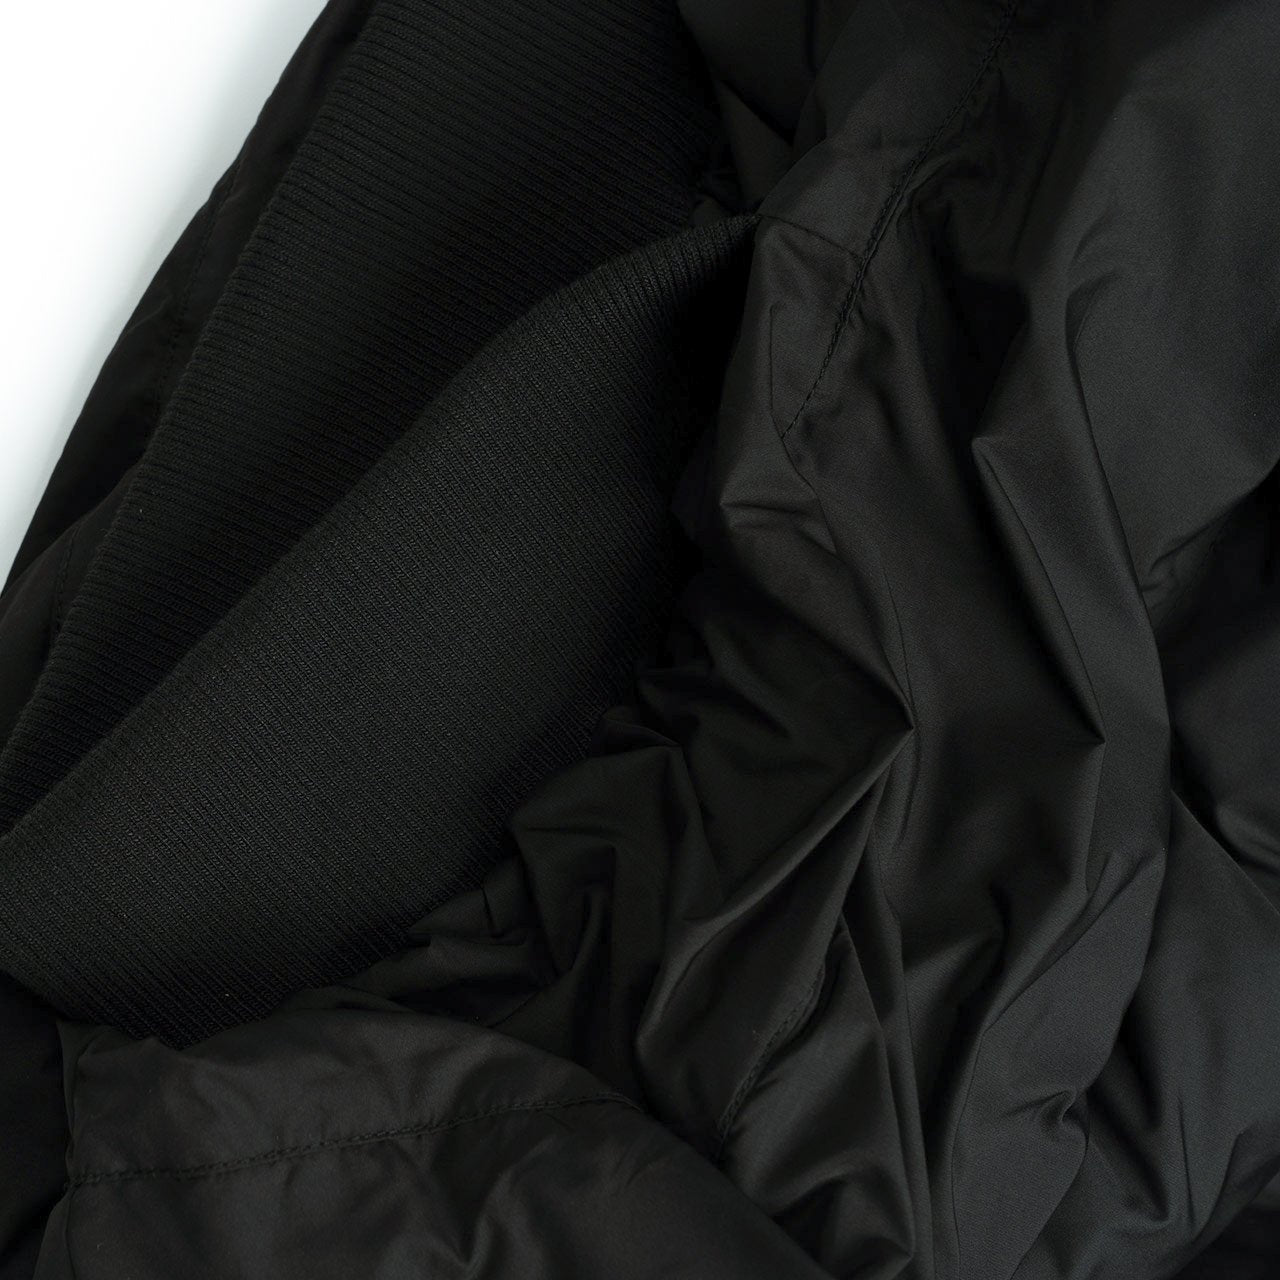 henrik vibskov henrik vibskov filo vest jacket (black)